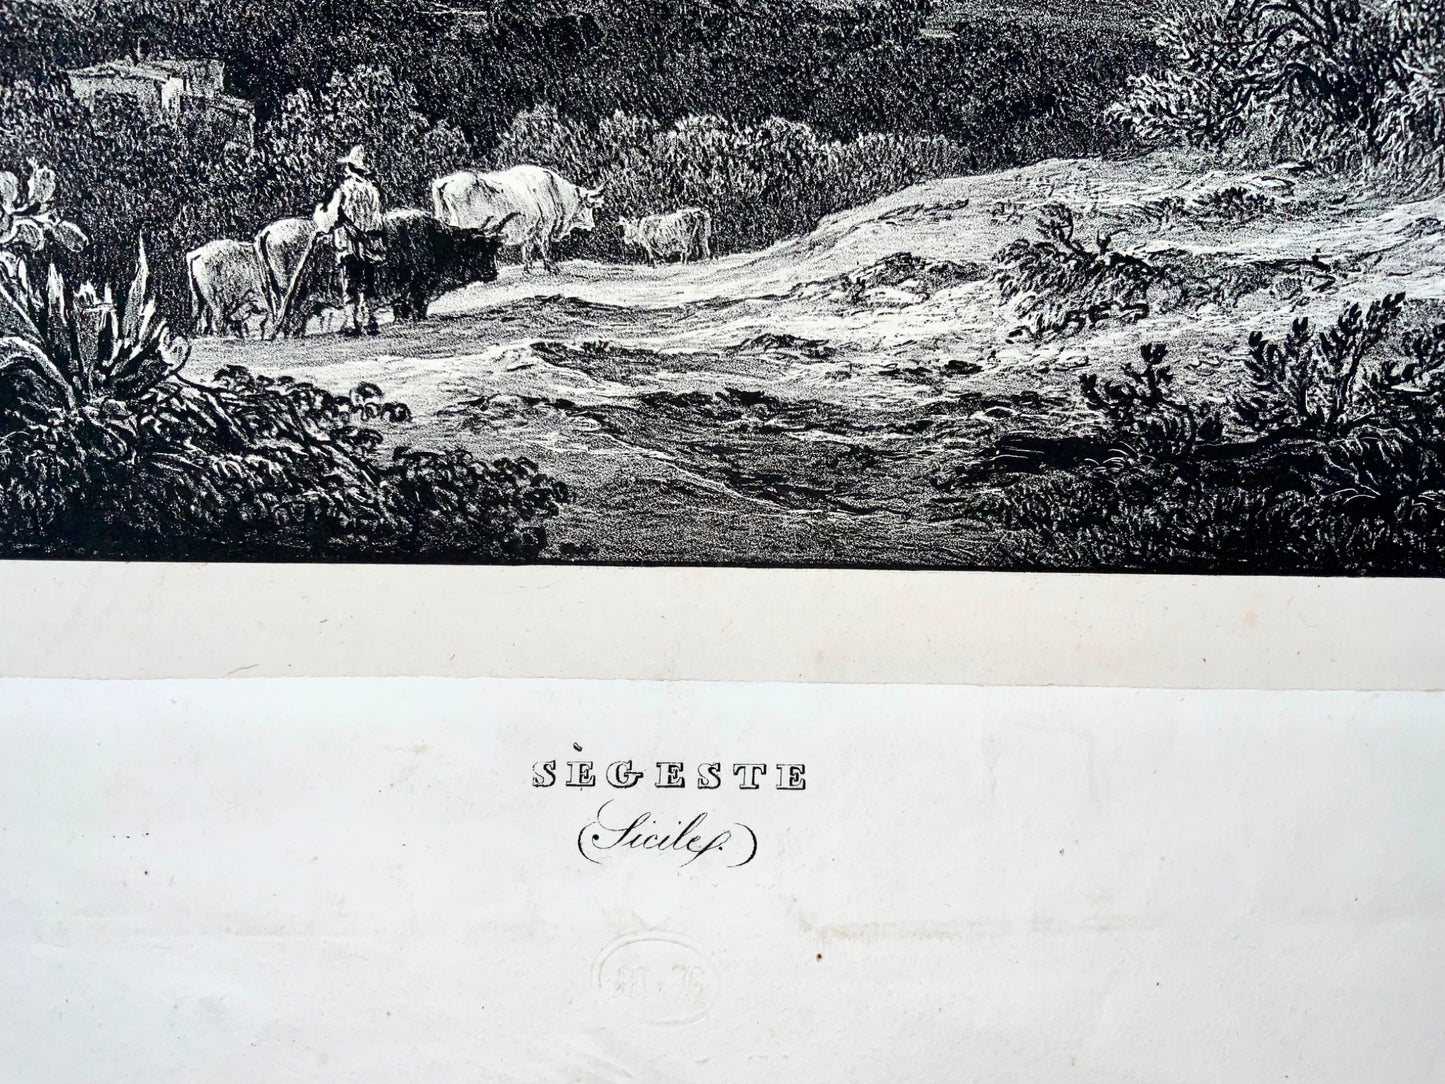 1833 Ségeste Sicile, Muller &amp; Horner, Ledoux sc., grande lithographie en pierre